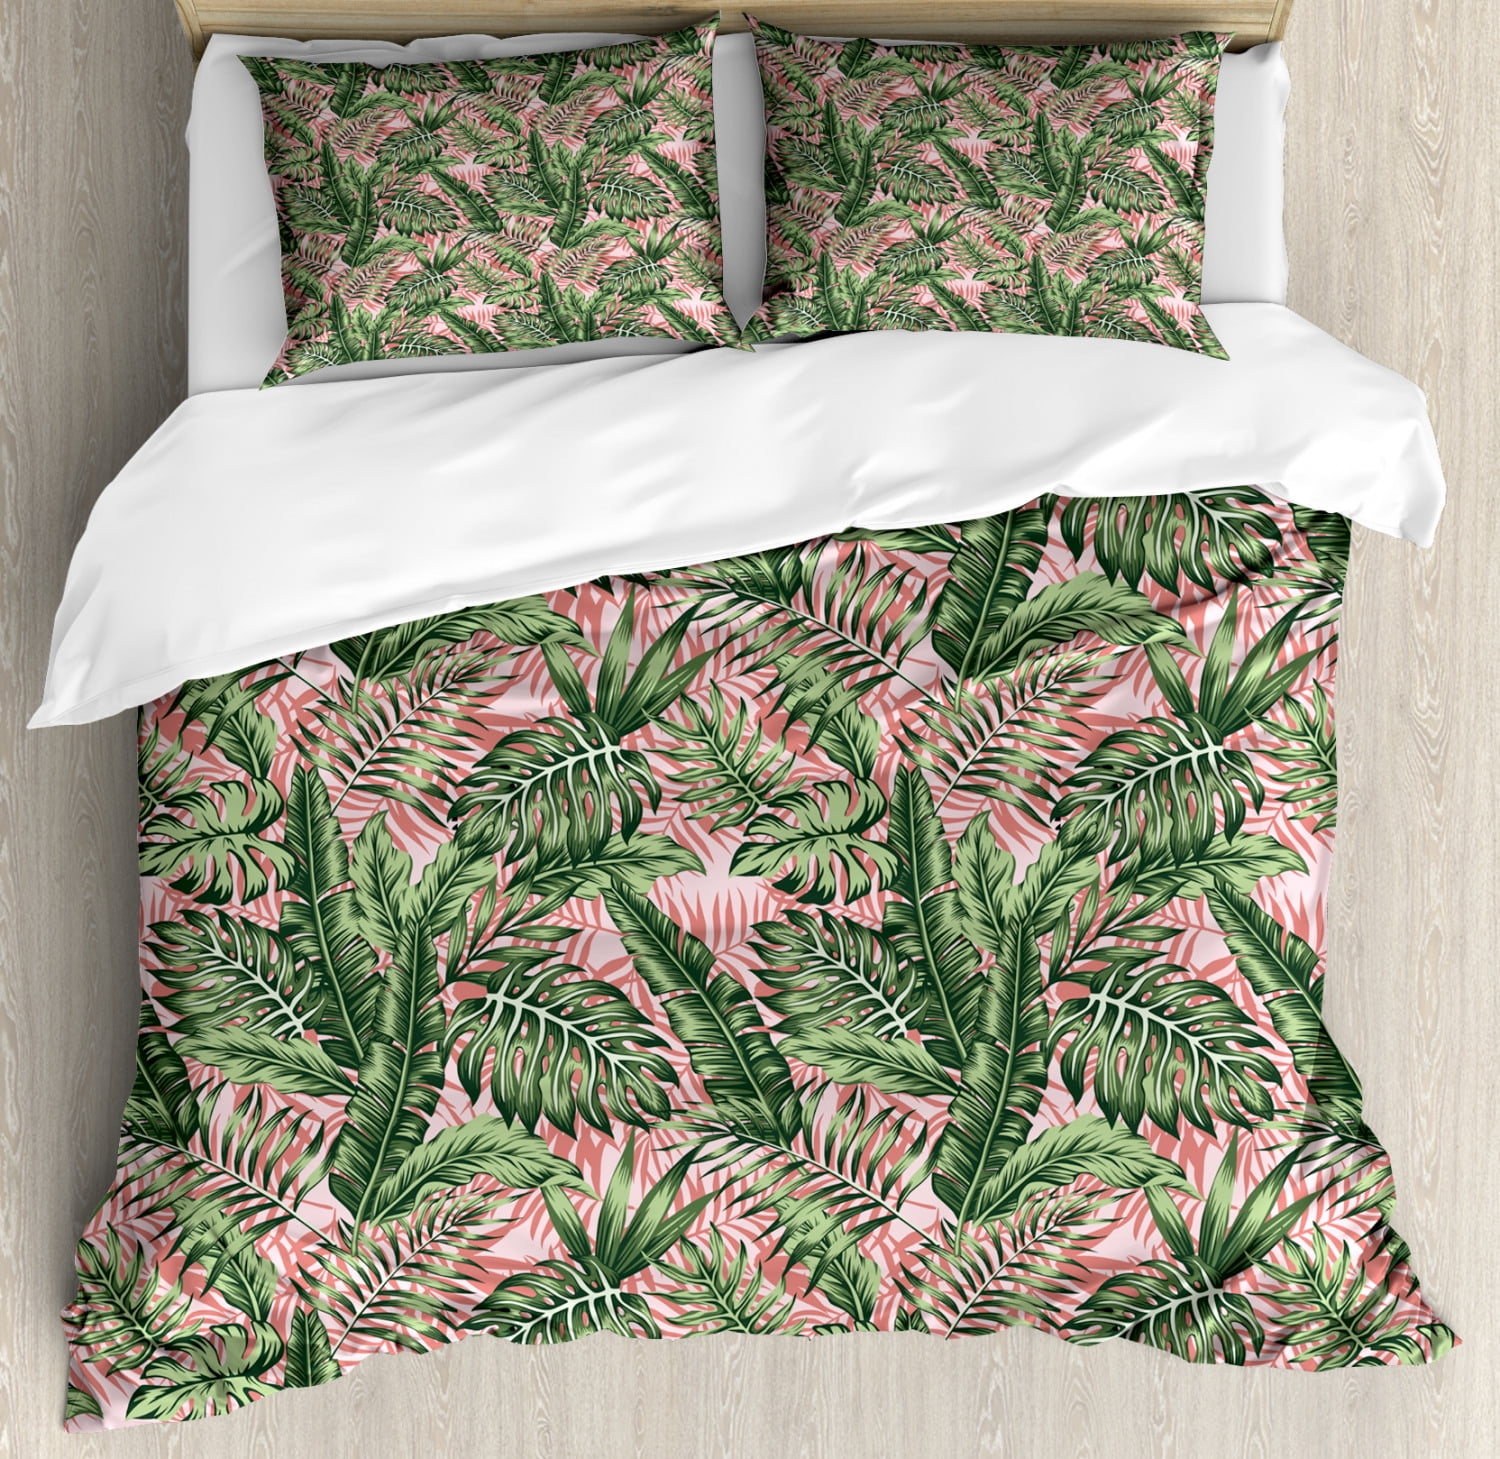 Jungle Cats Leopard Print Duvet Cover Tropical Leaf Quilt Bedding Bed Set Double 